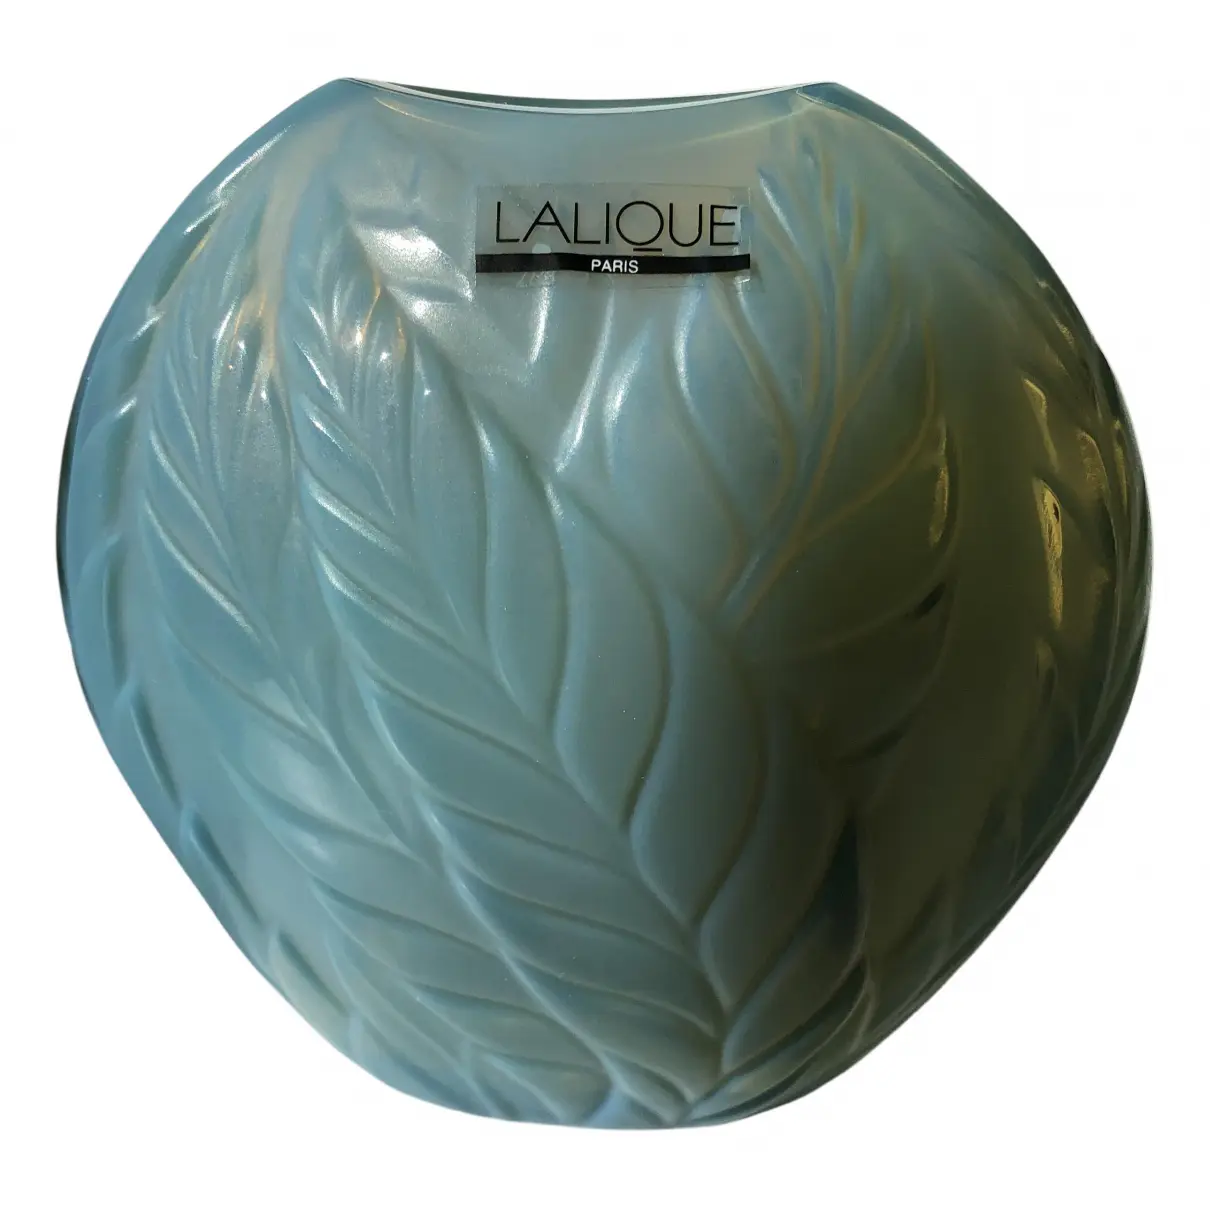 Crystal vase Lalique - Vintage